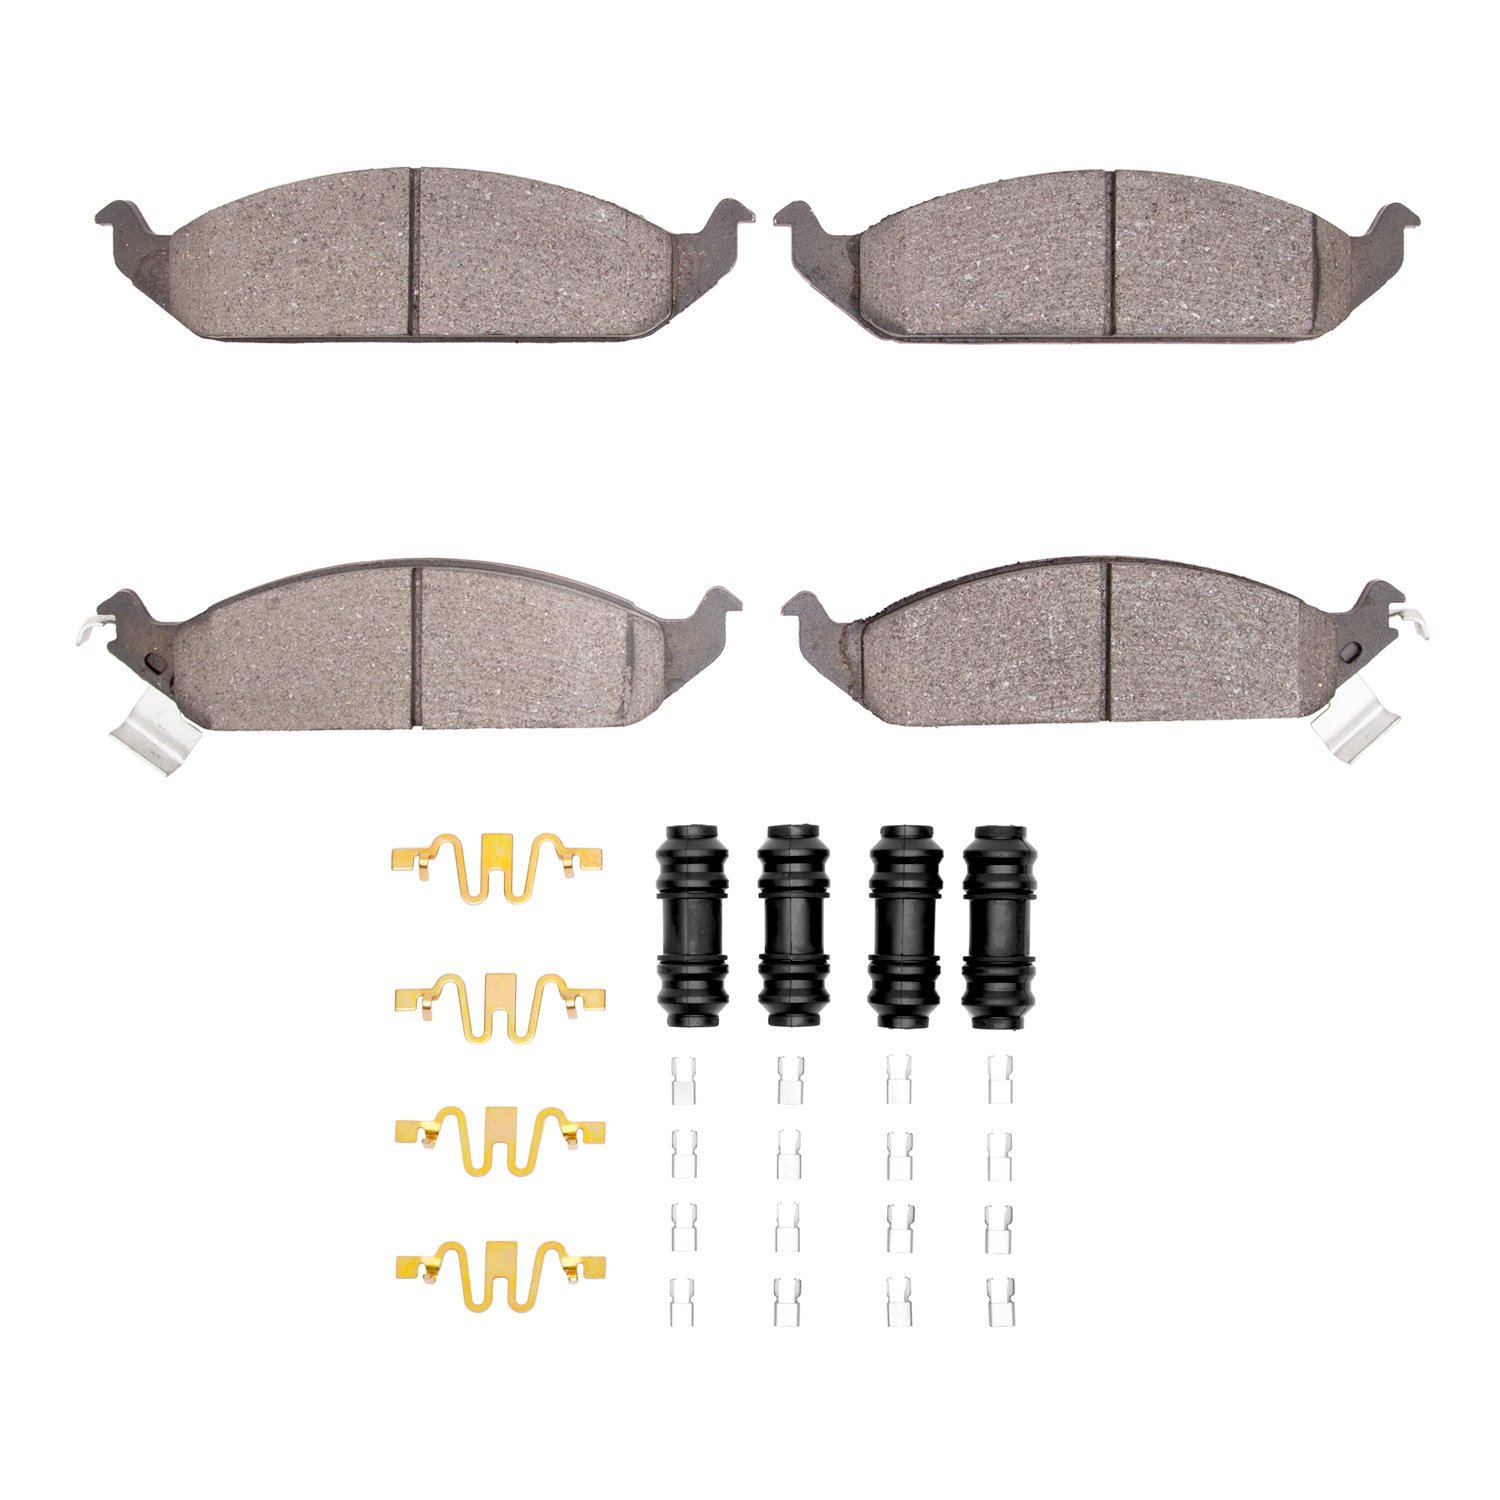 1310-0650-01 3000-Series Ceramic Brake Pads & Hardware Kit, 1995-2000 Mopar, Position: Front